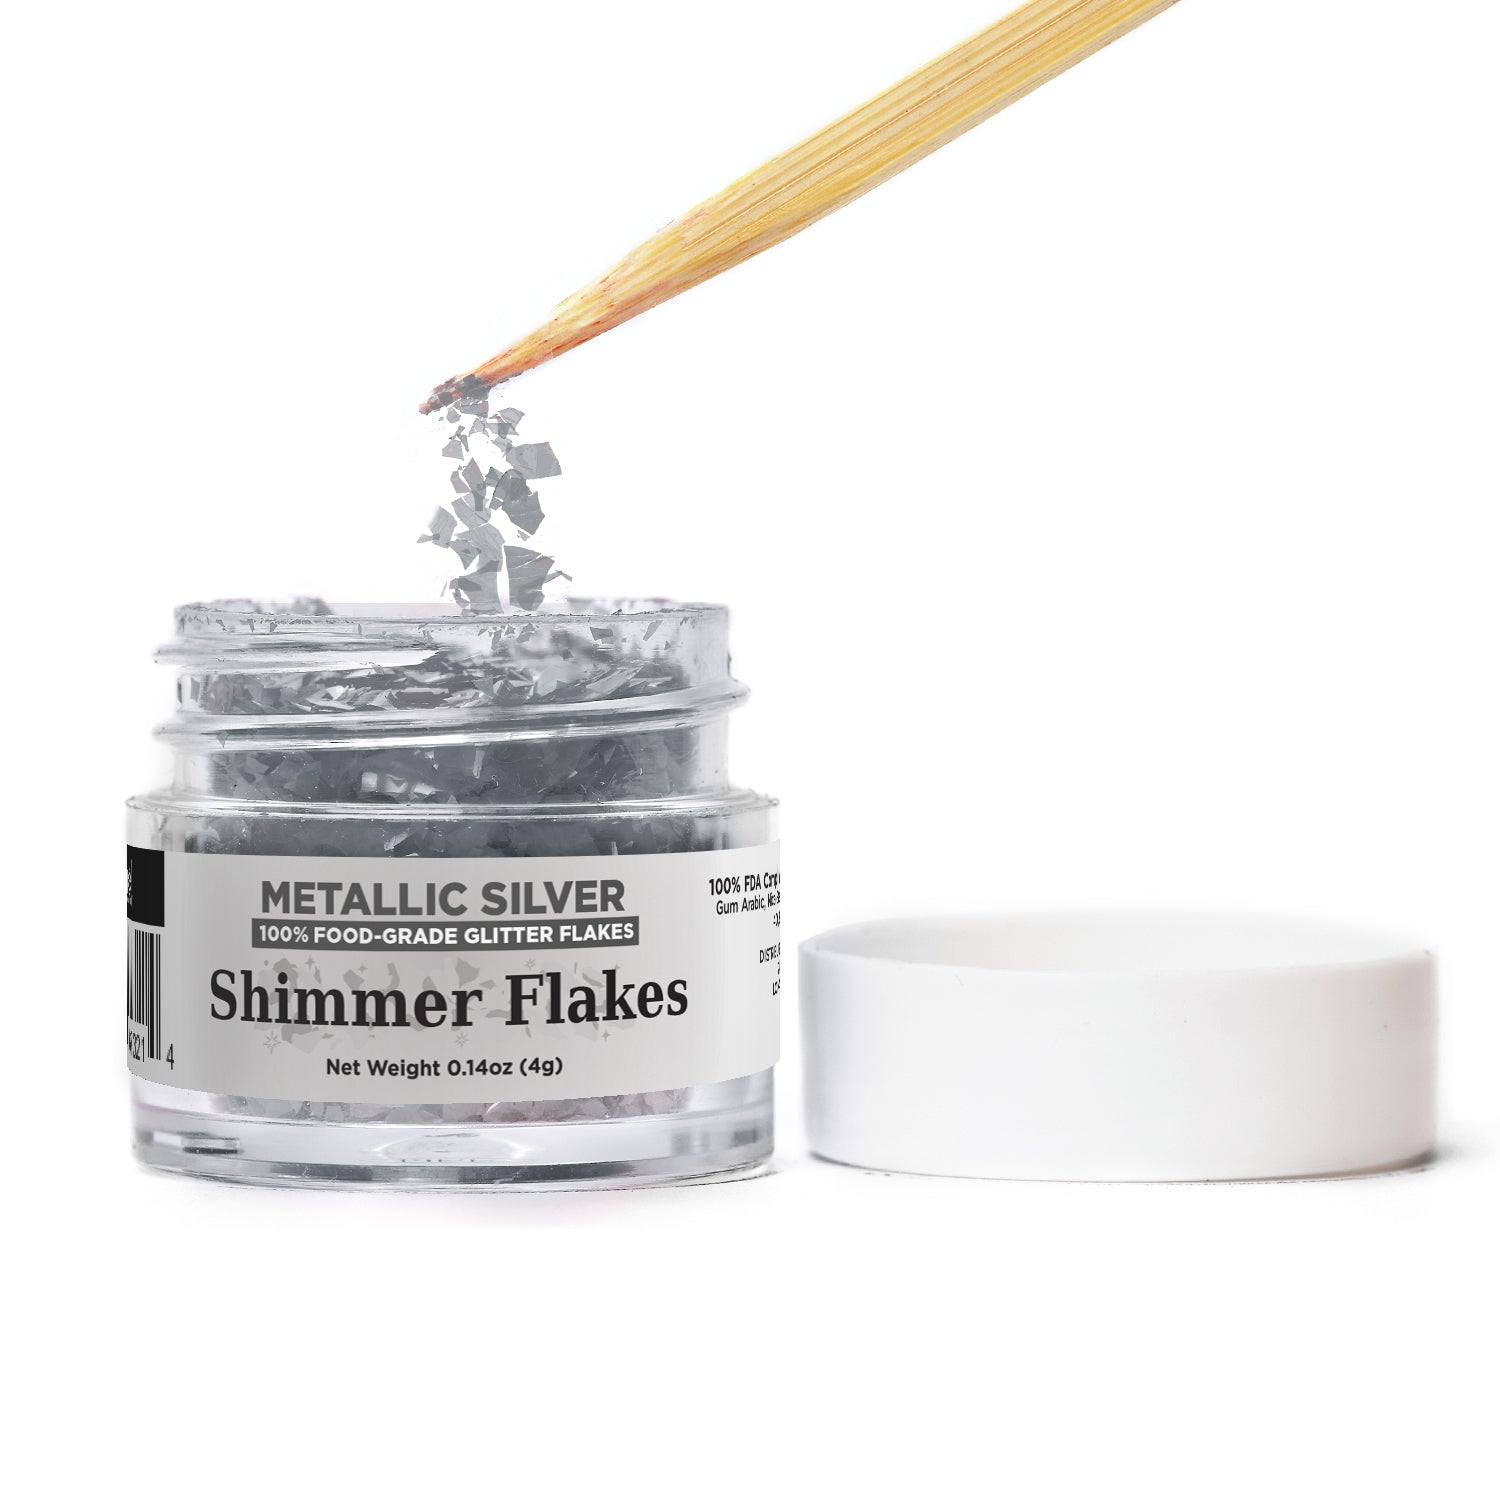 FDA approved edible glitter flakes, glitter flakes, edible glitter, 100% edible glitter flakes, drink garnish, metallic silver edible glitter